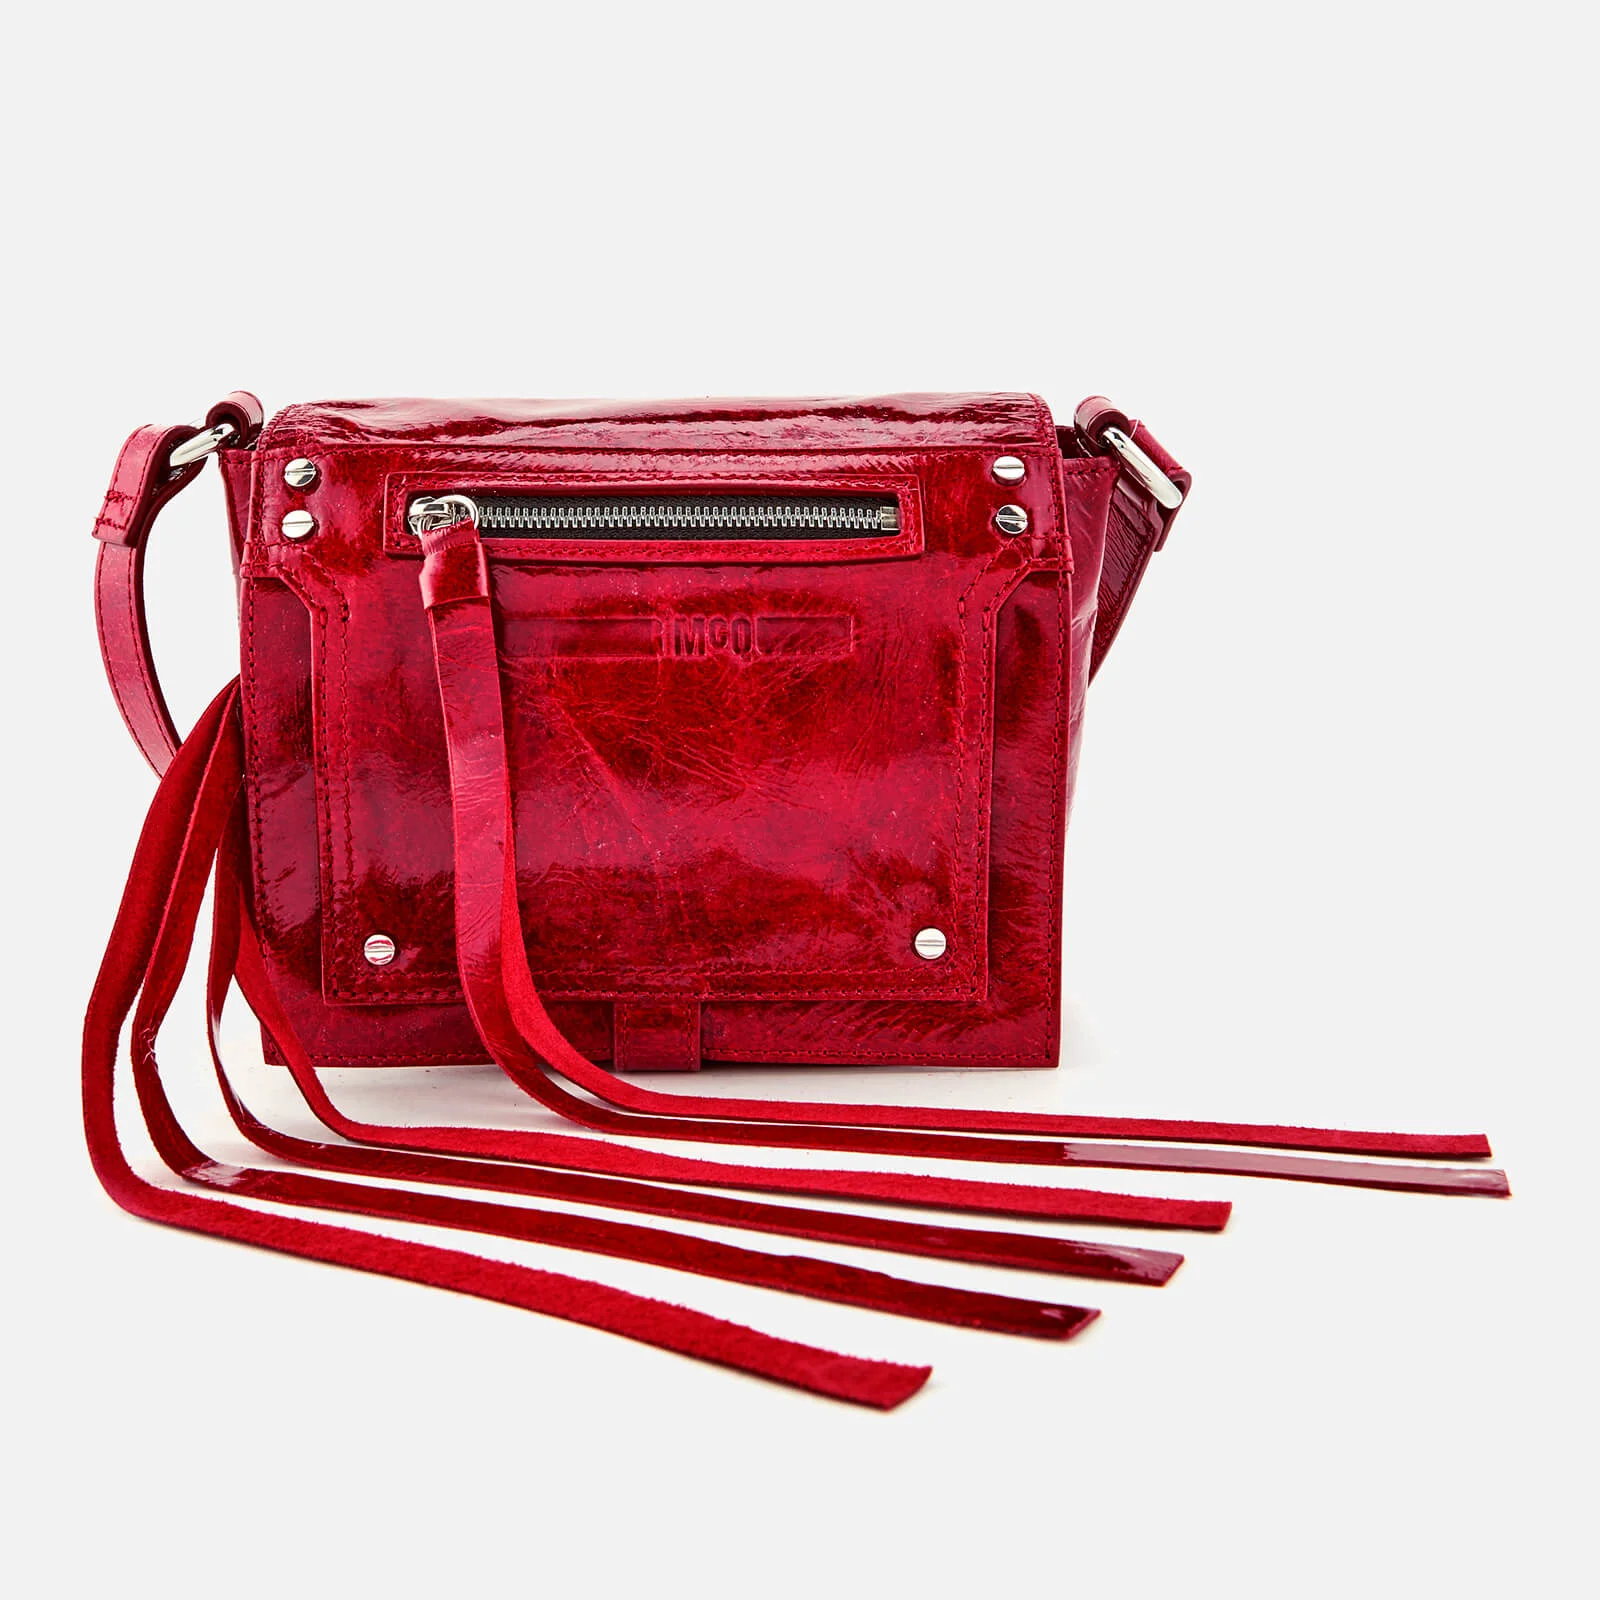 McQ Alexander McQueen Women's Loveless Mini Cross Body Bag - Riot Red Image 1